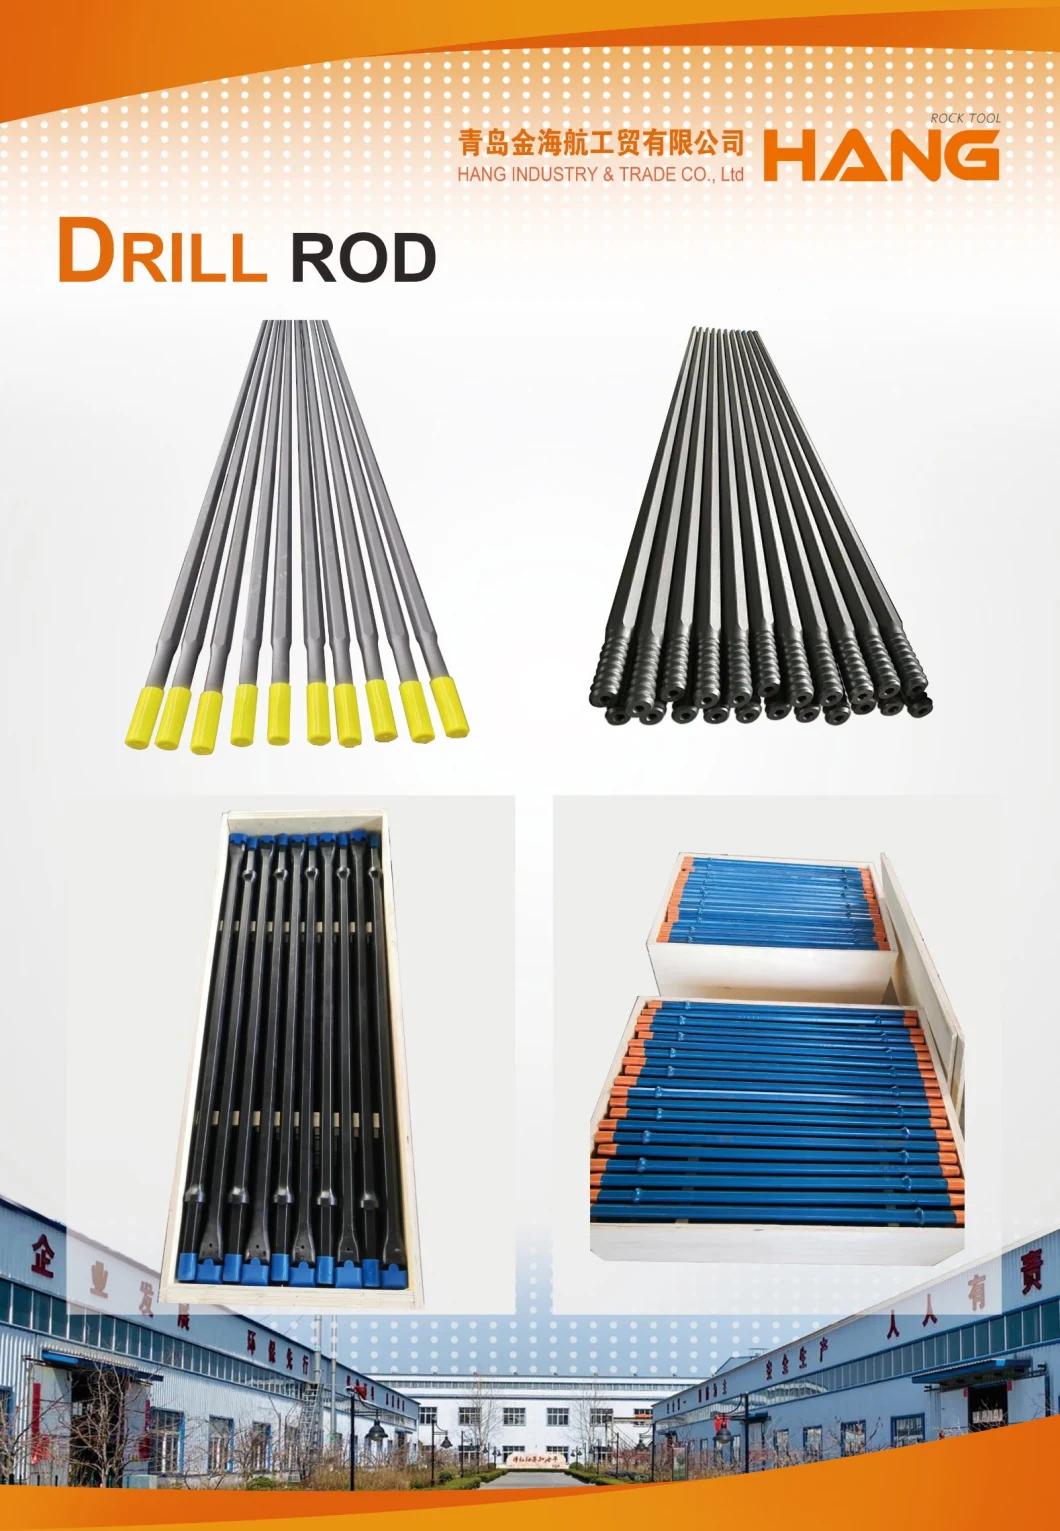 12 Degree Taper Drill Rod for Drilling